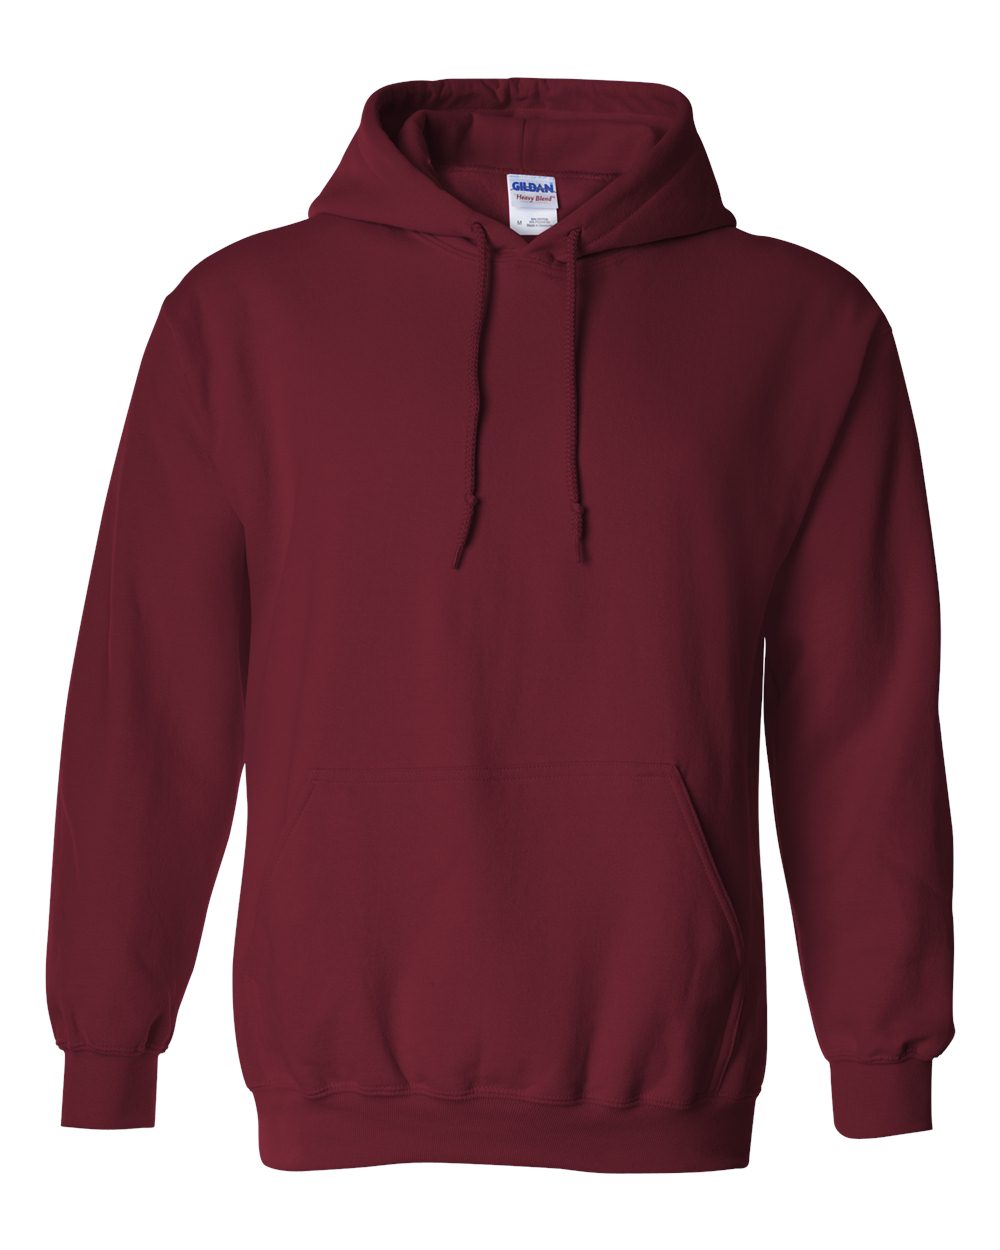 Gildan 18500 Heavyweight Blend Hooded Sweatshirt - From $12.31